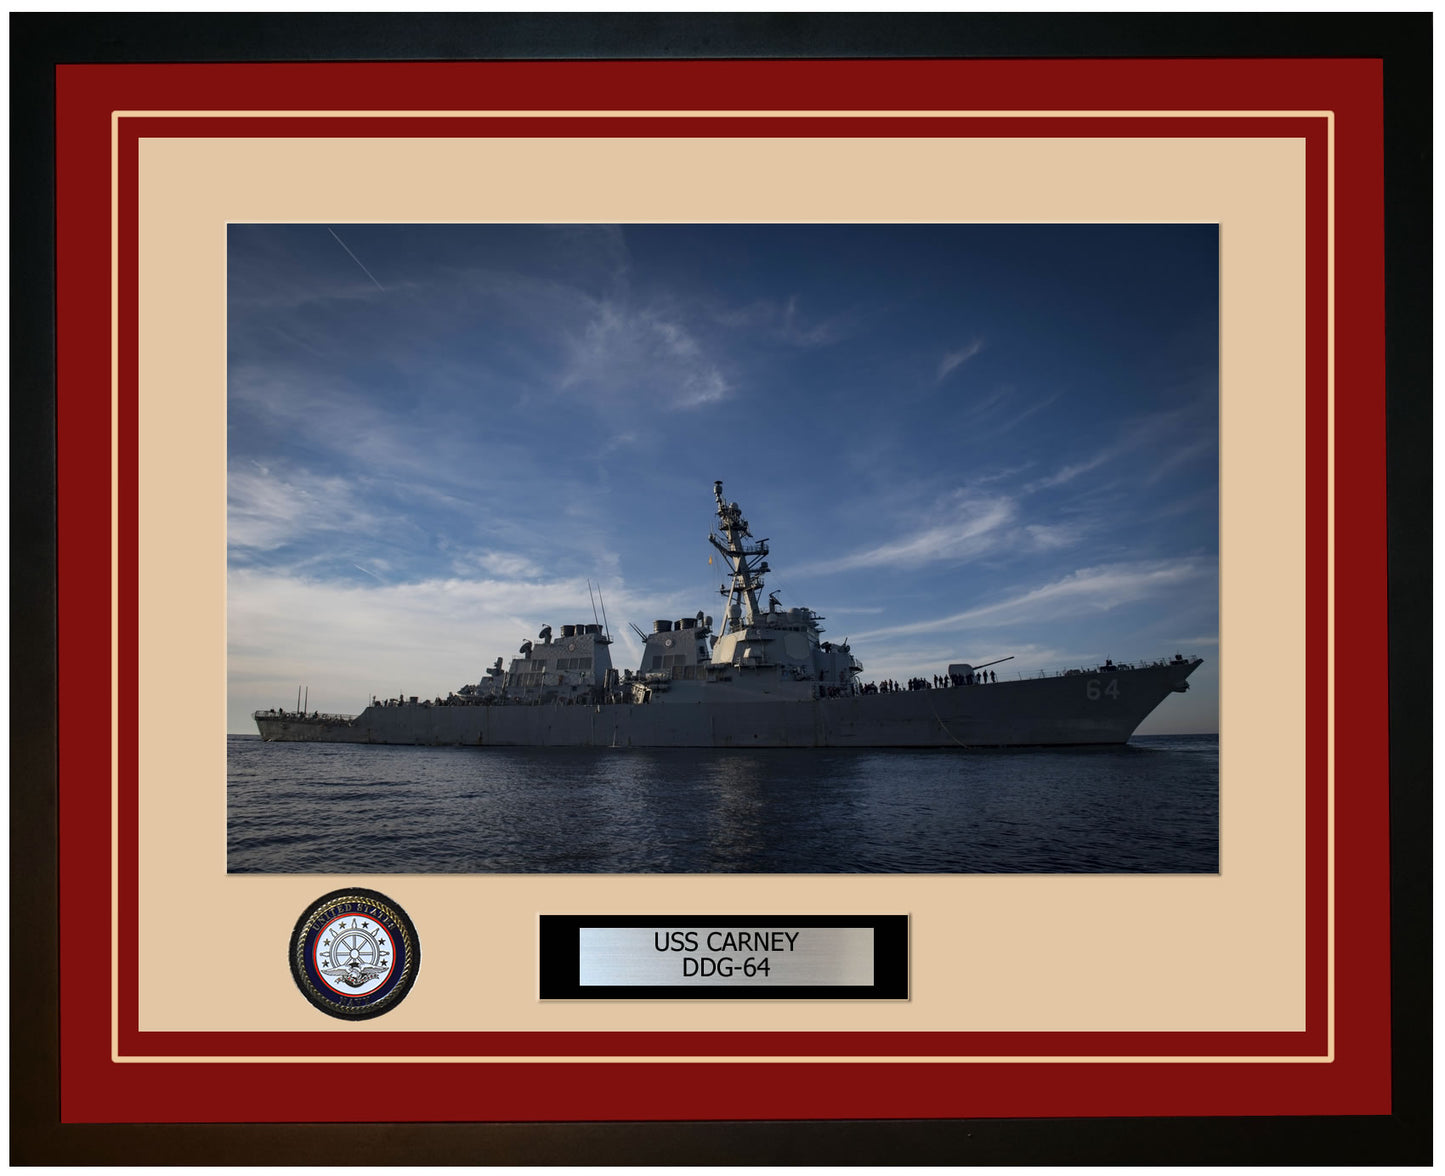 USS CARNEY DDG-64 Framed Navy Ship Photo Burgundy